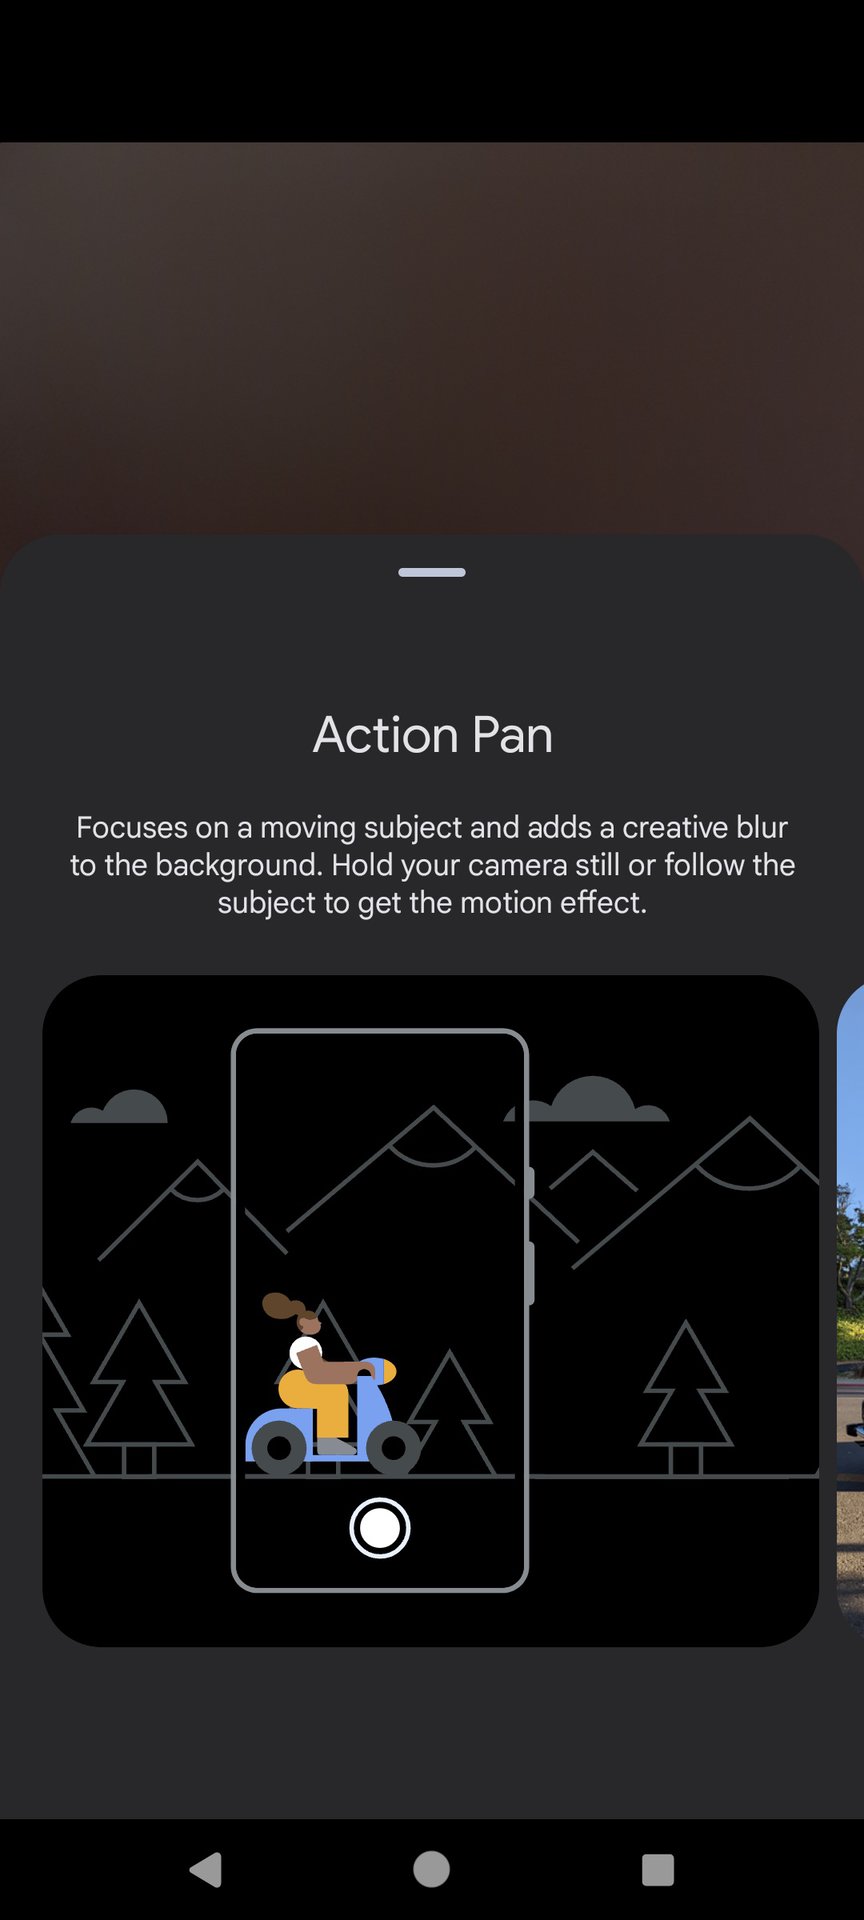 Google Camera Action Pan